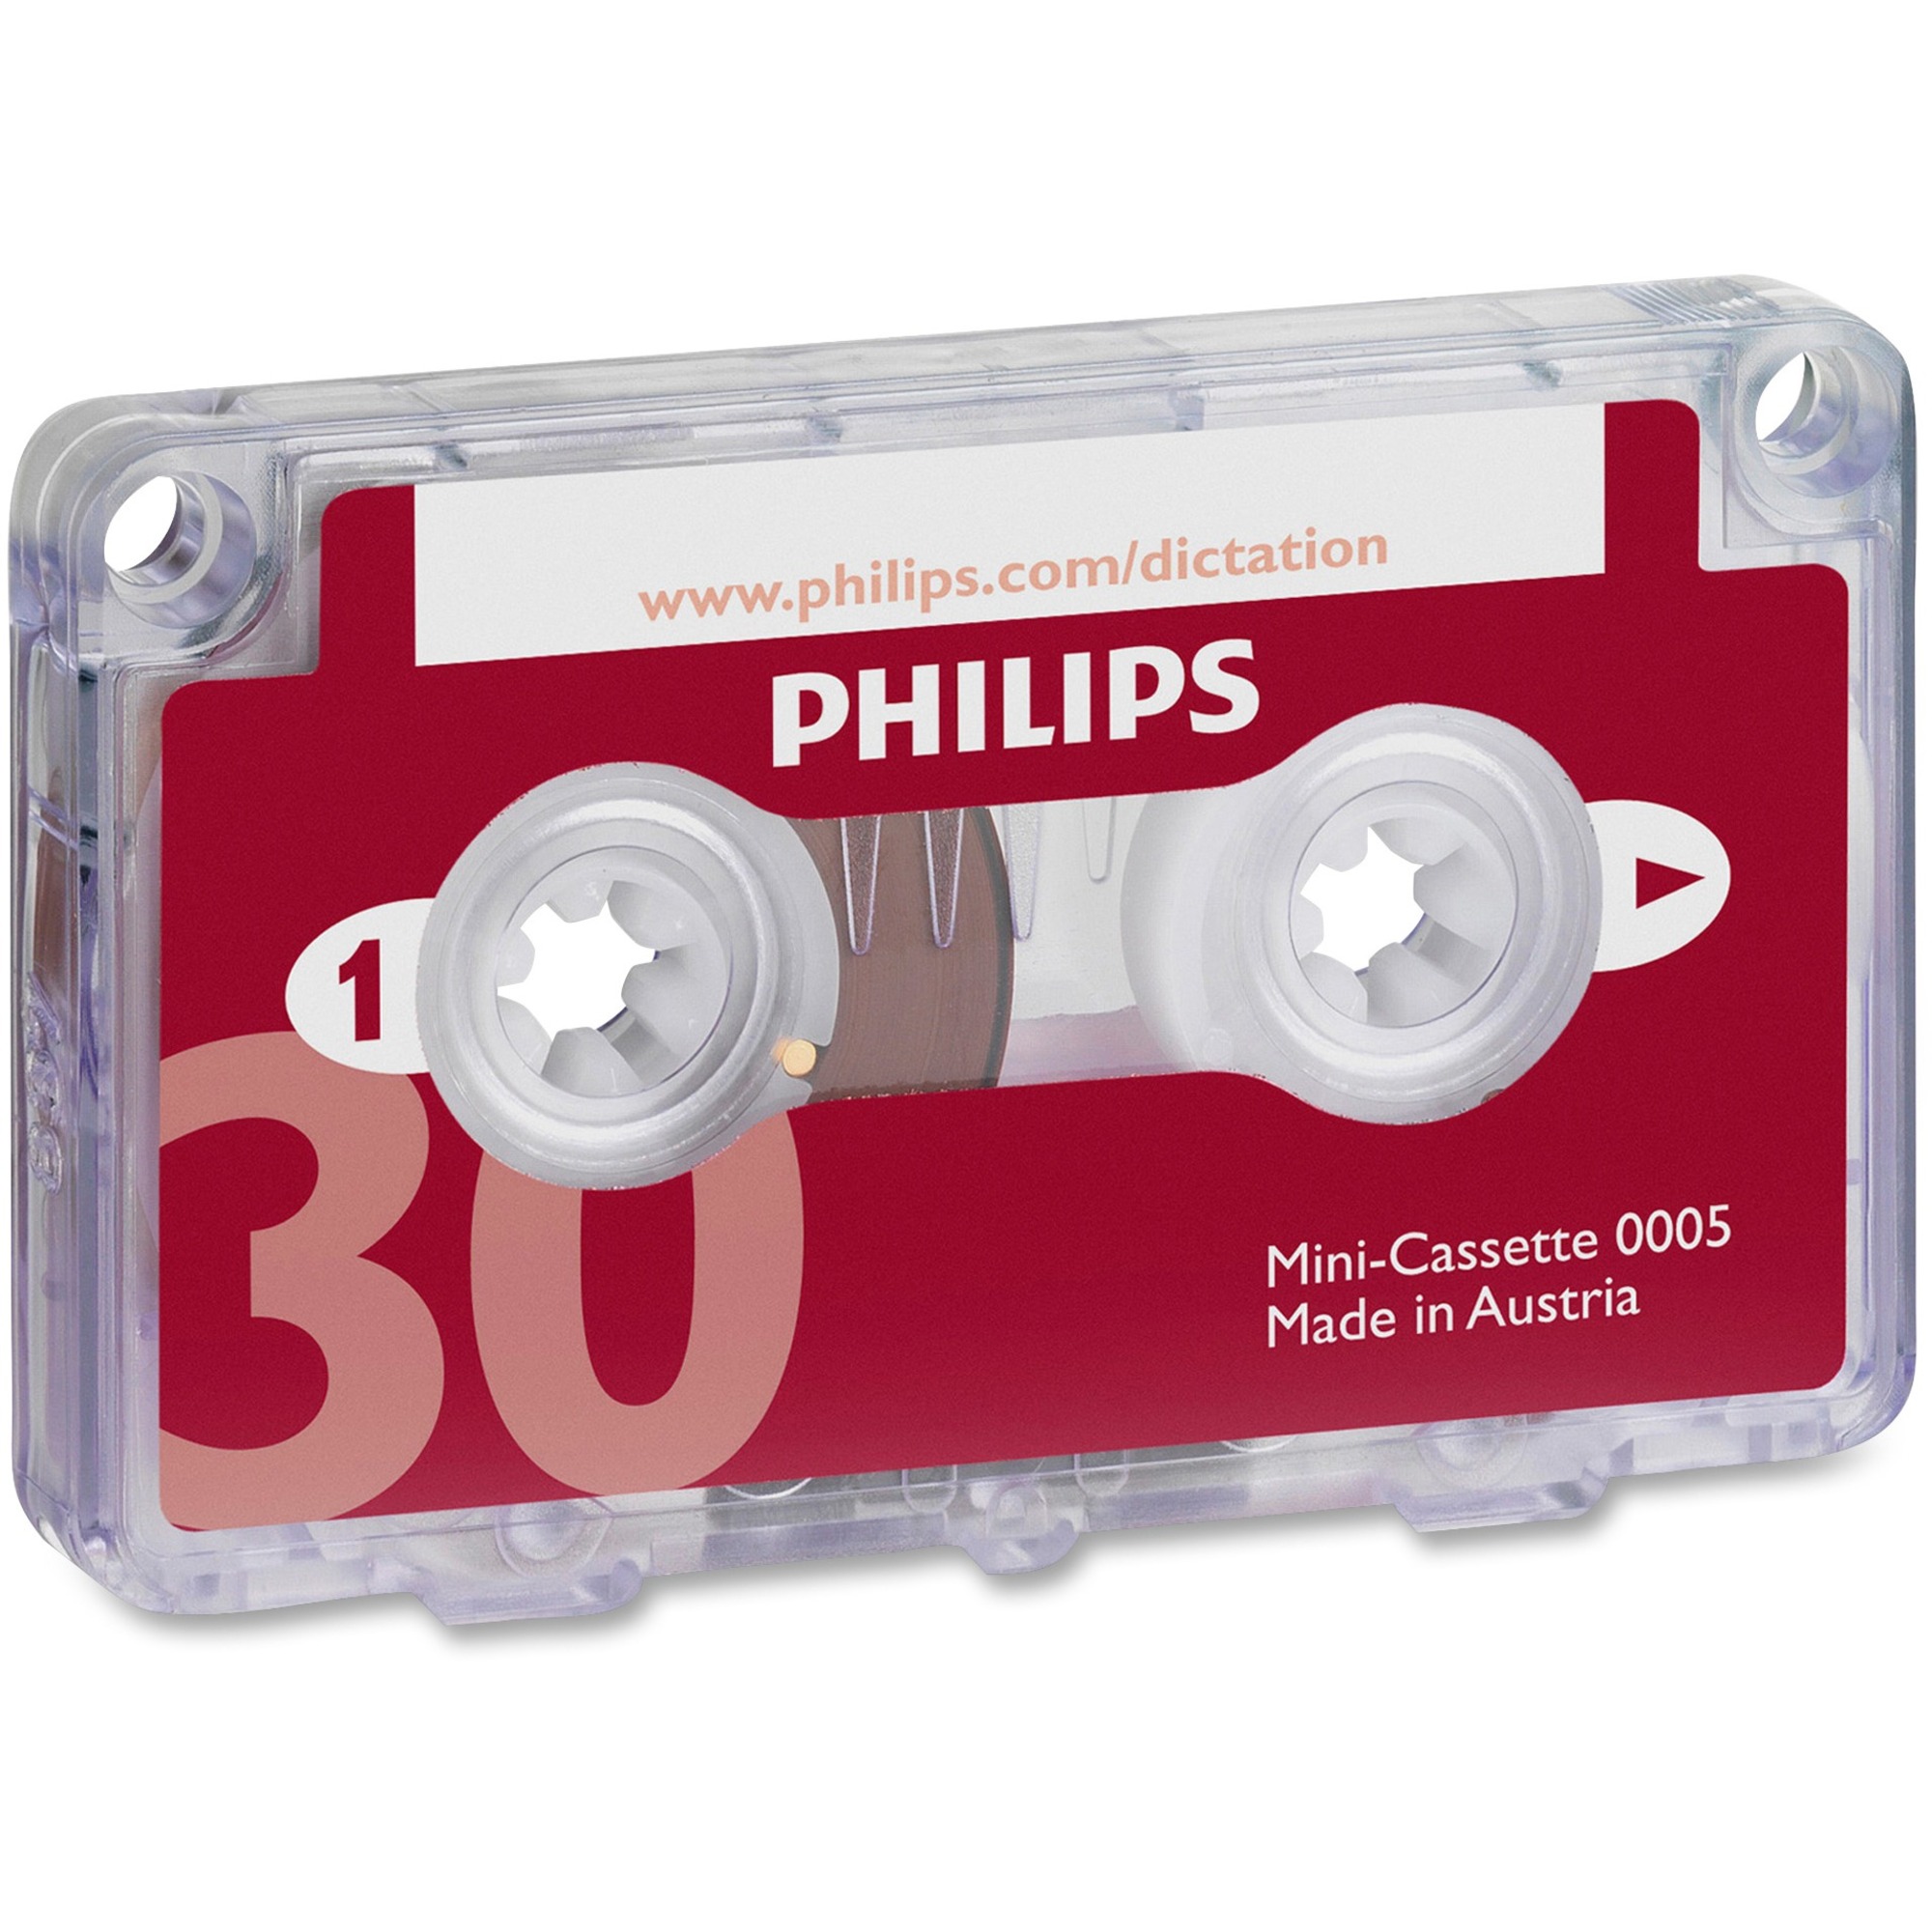 Philips, PSPLFH000560, Speech Mini Dictation Cassette, Red - image 2 of 2